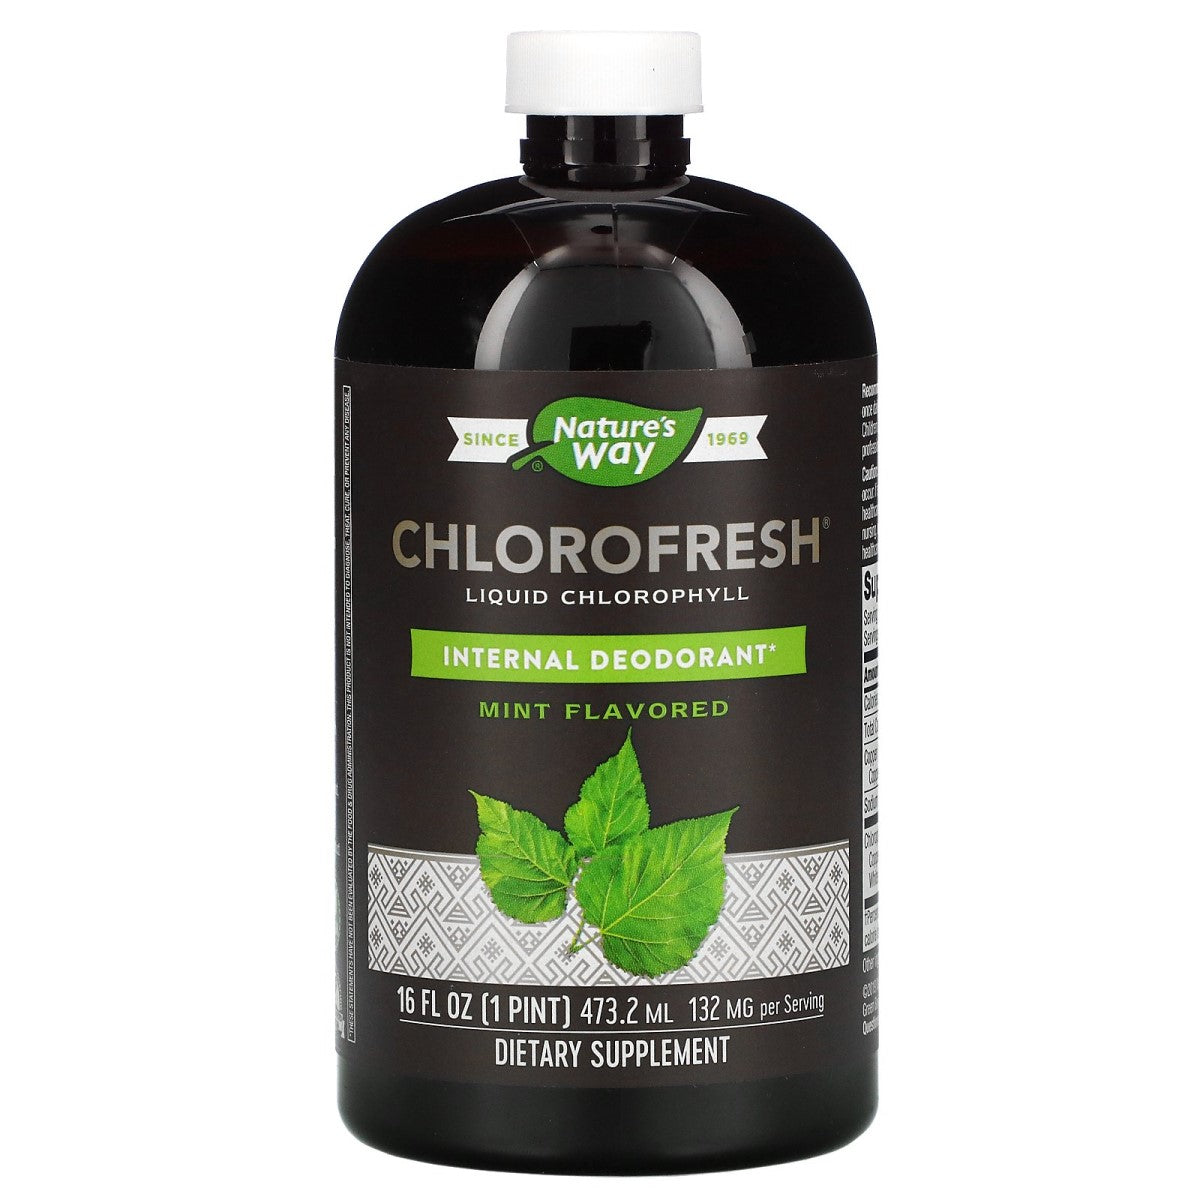 Primary image of Chlorofresh Mint